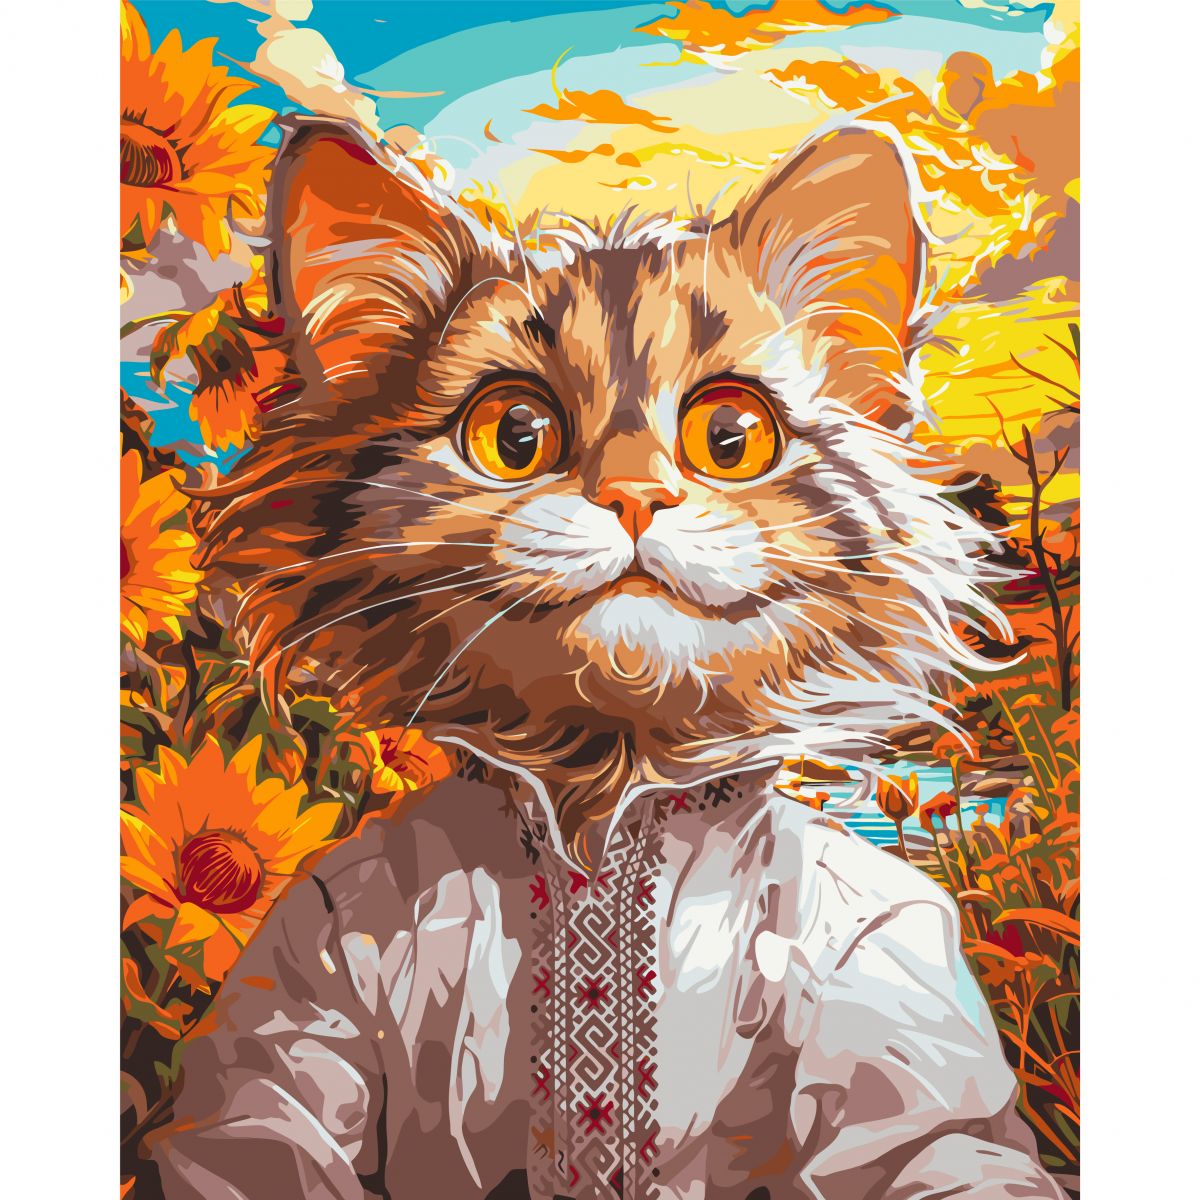 Картина по номерам "Украинский котик" 40x50 см